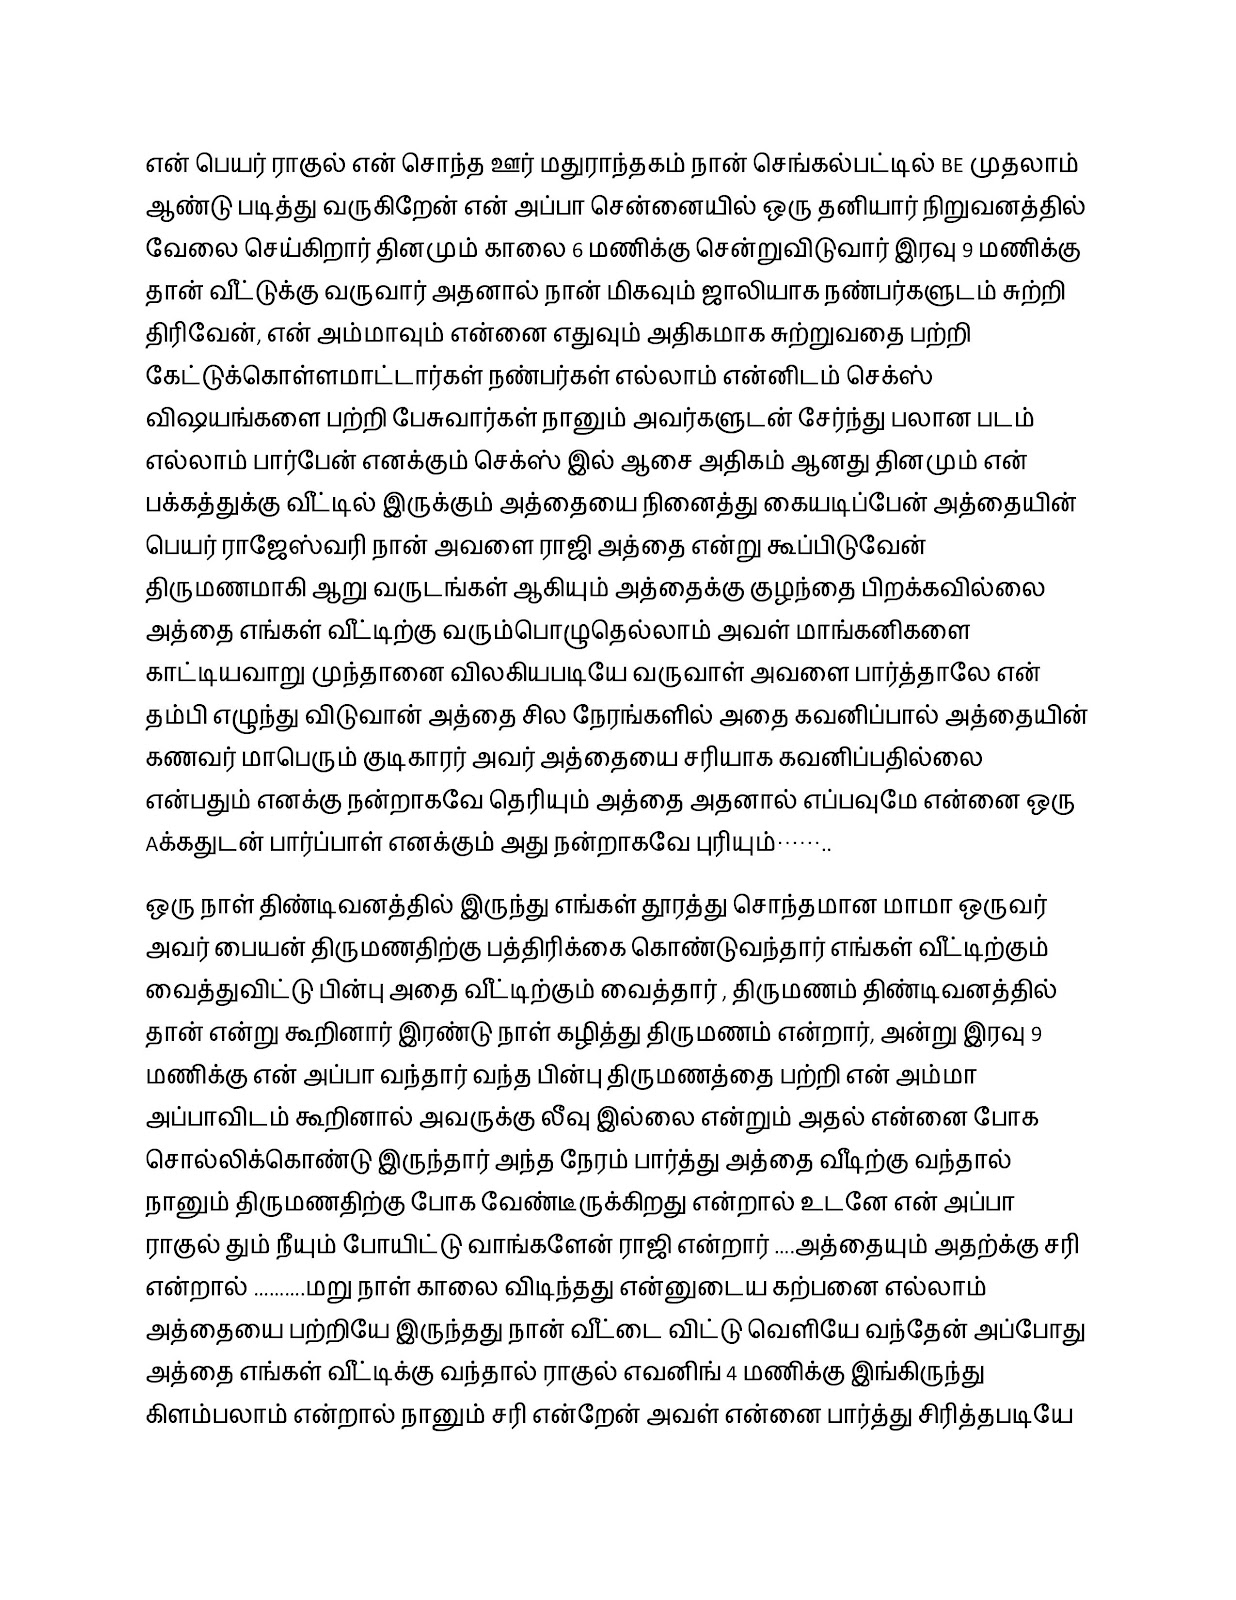 Tamil sex stories pdf download